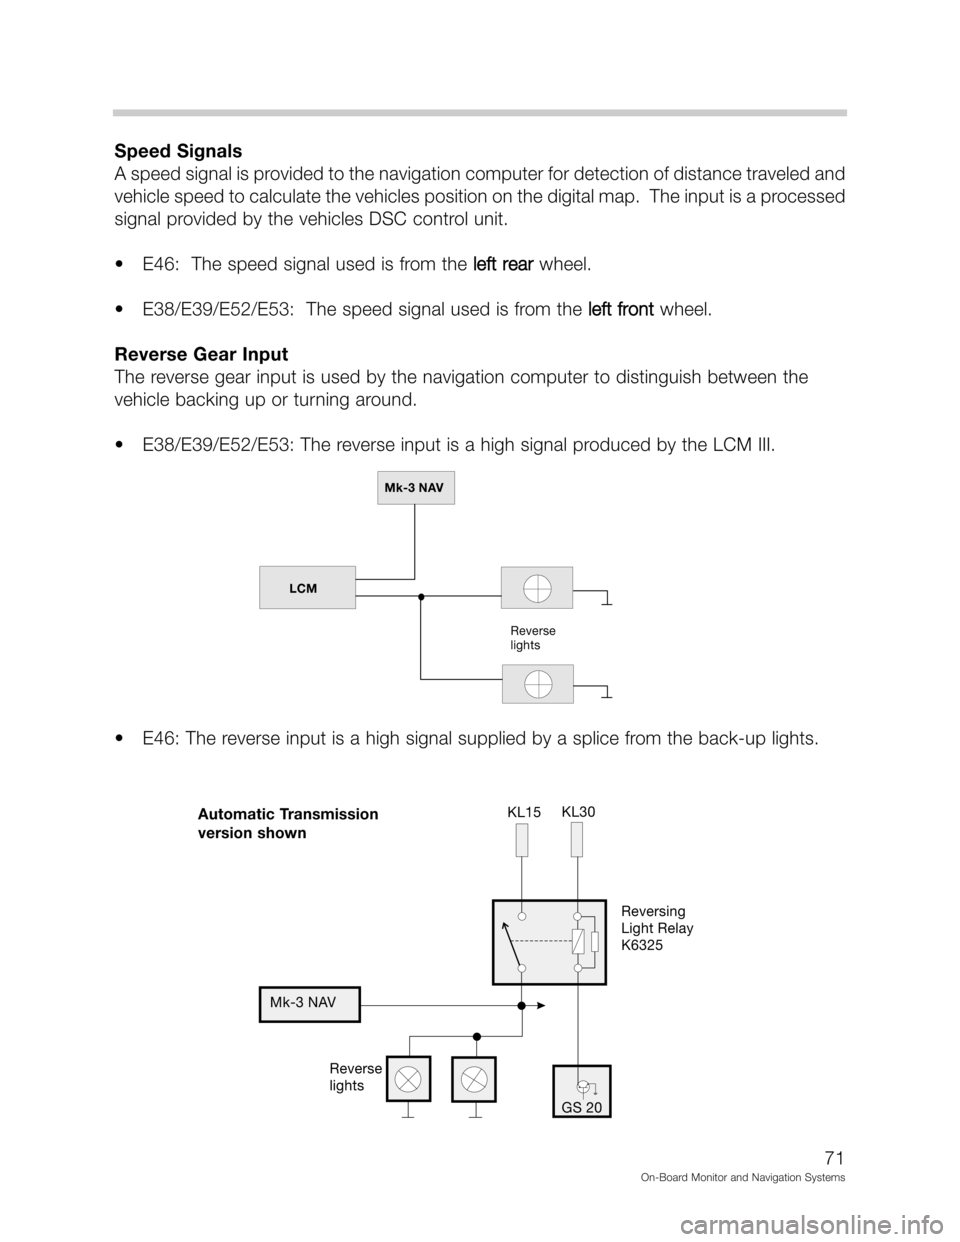 BMW X5 2001 E53 On Board Monitor System Manual PDF ,*



"&
(	
/ 1!"



&
&
	


&

&
&

